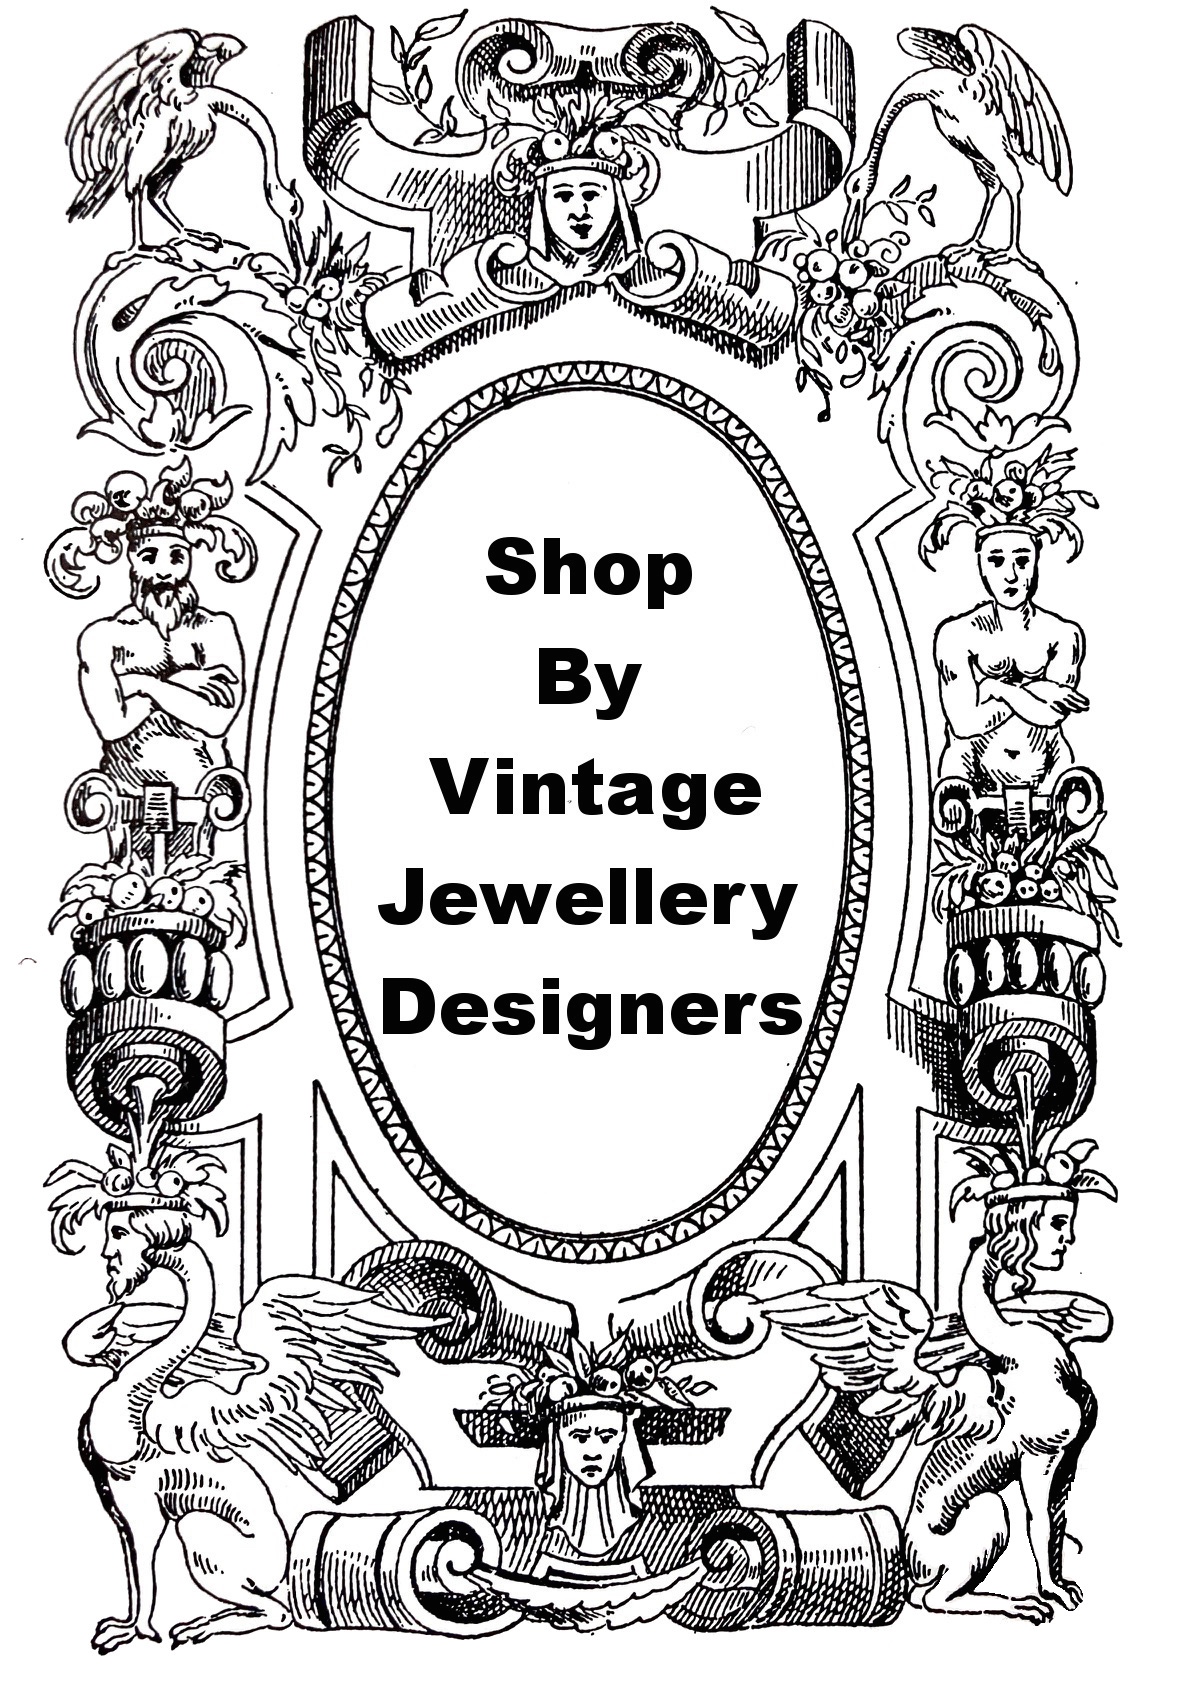 Header - Shop by Vintage Jewellery Designers